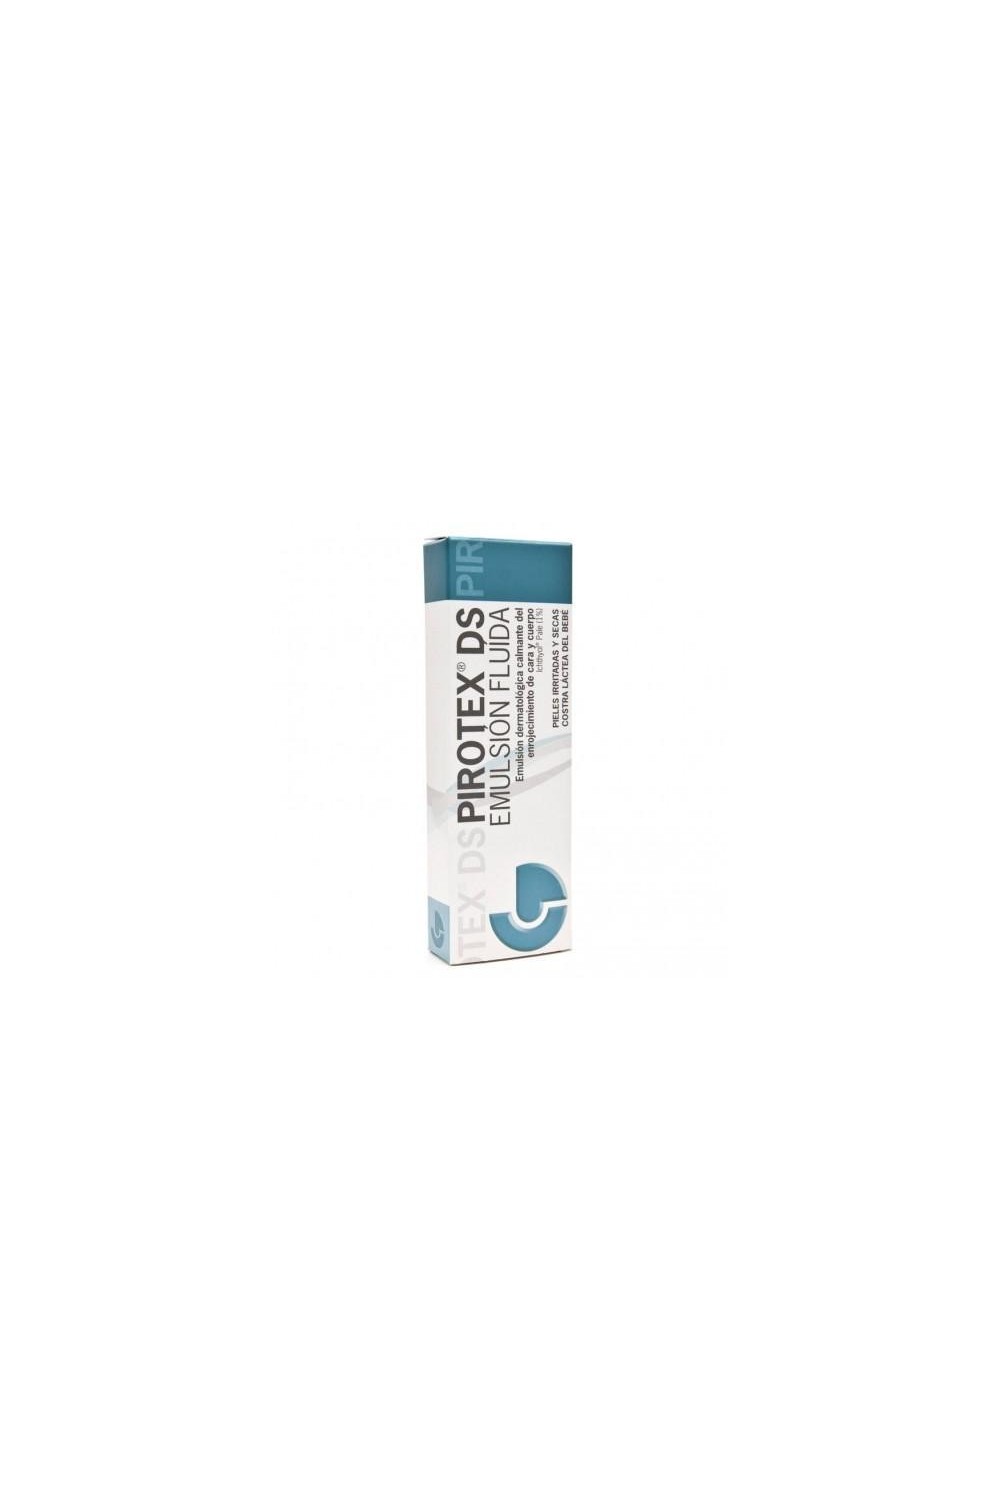 Unipharma Pirotex™ Ds Fluid Emulsion 75ml